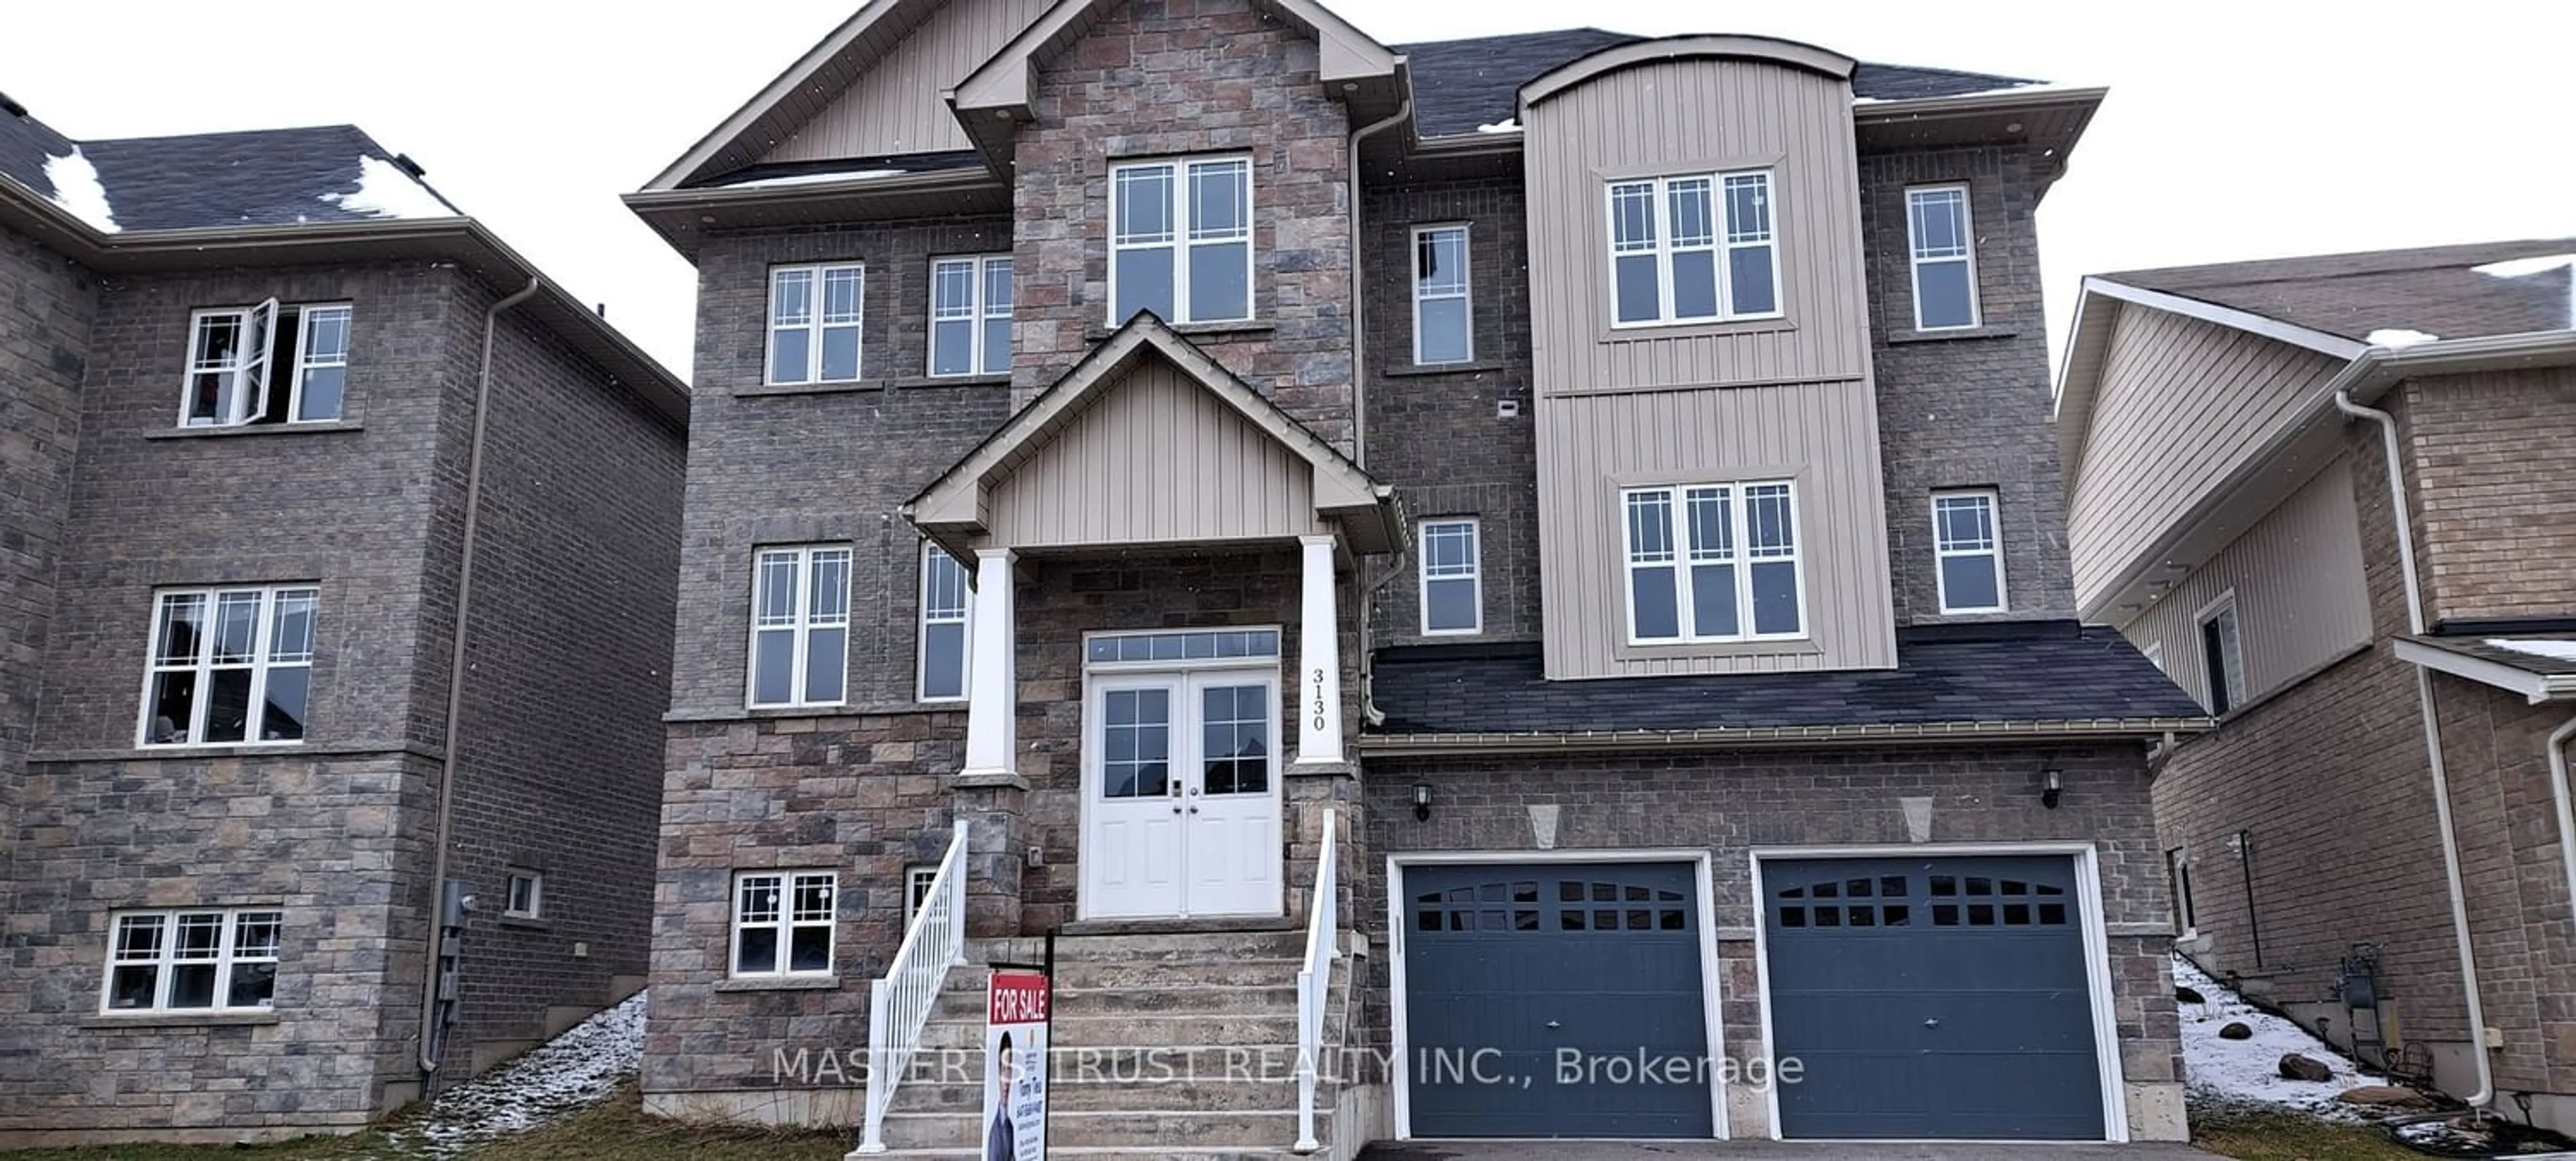 Home with brick exterior material for 3130 Monach Dr, Orillia Ontario L3V 8K3